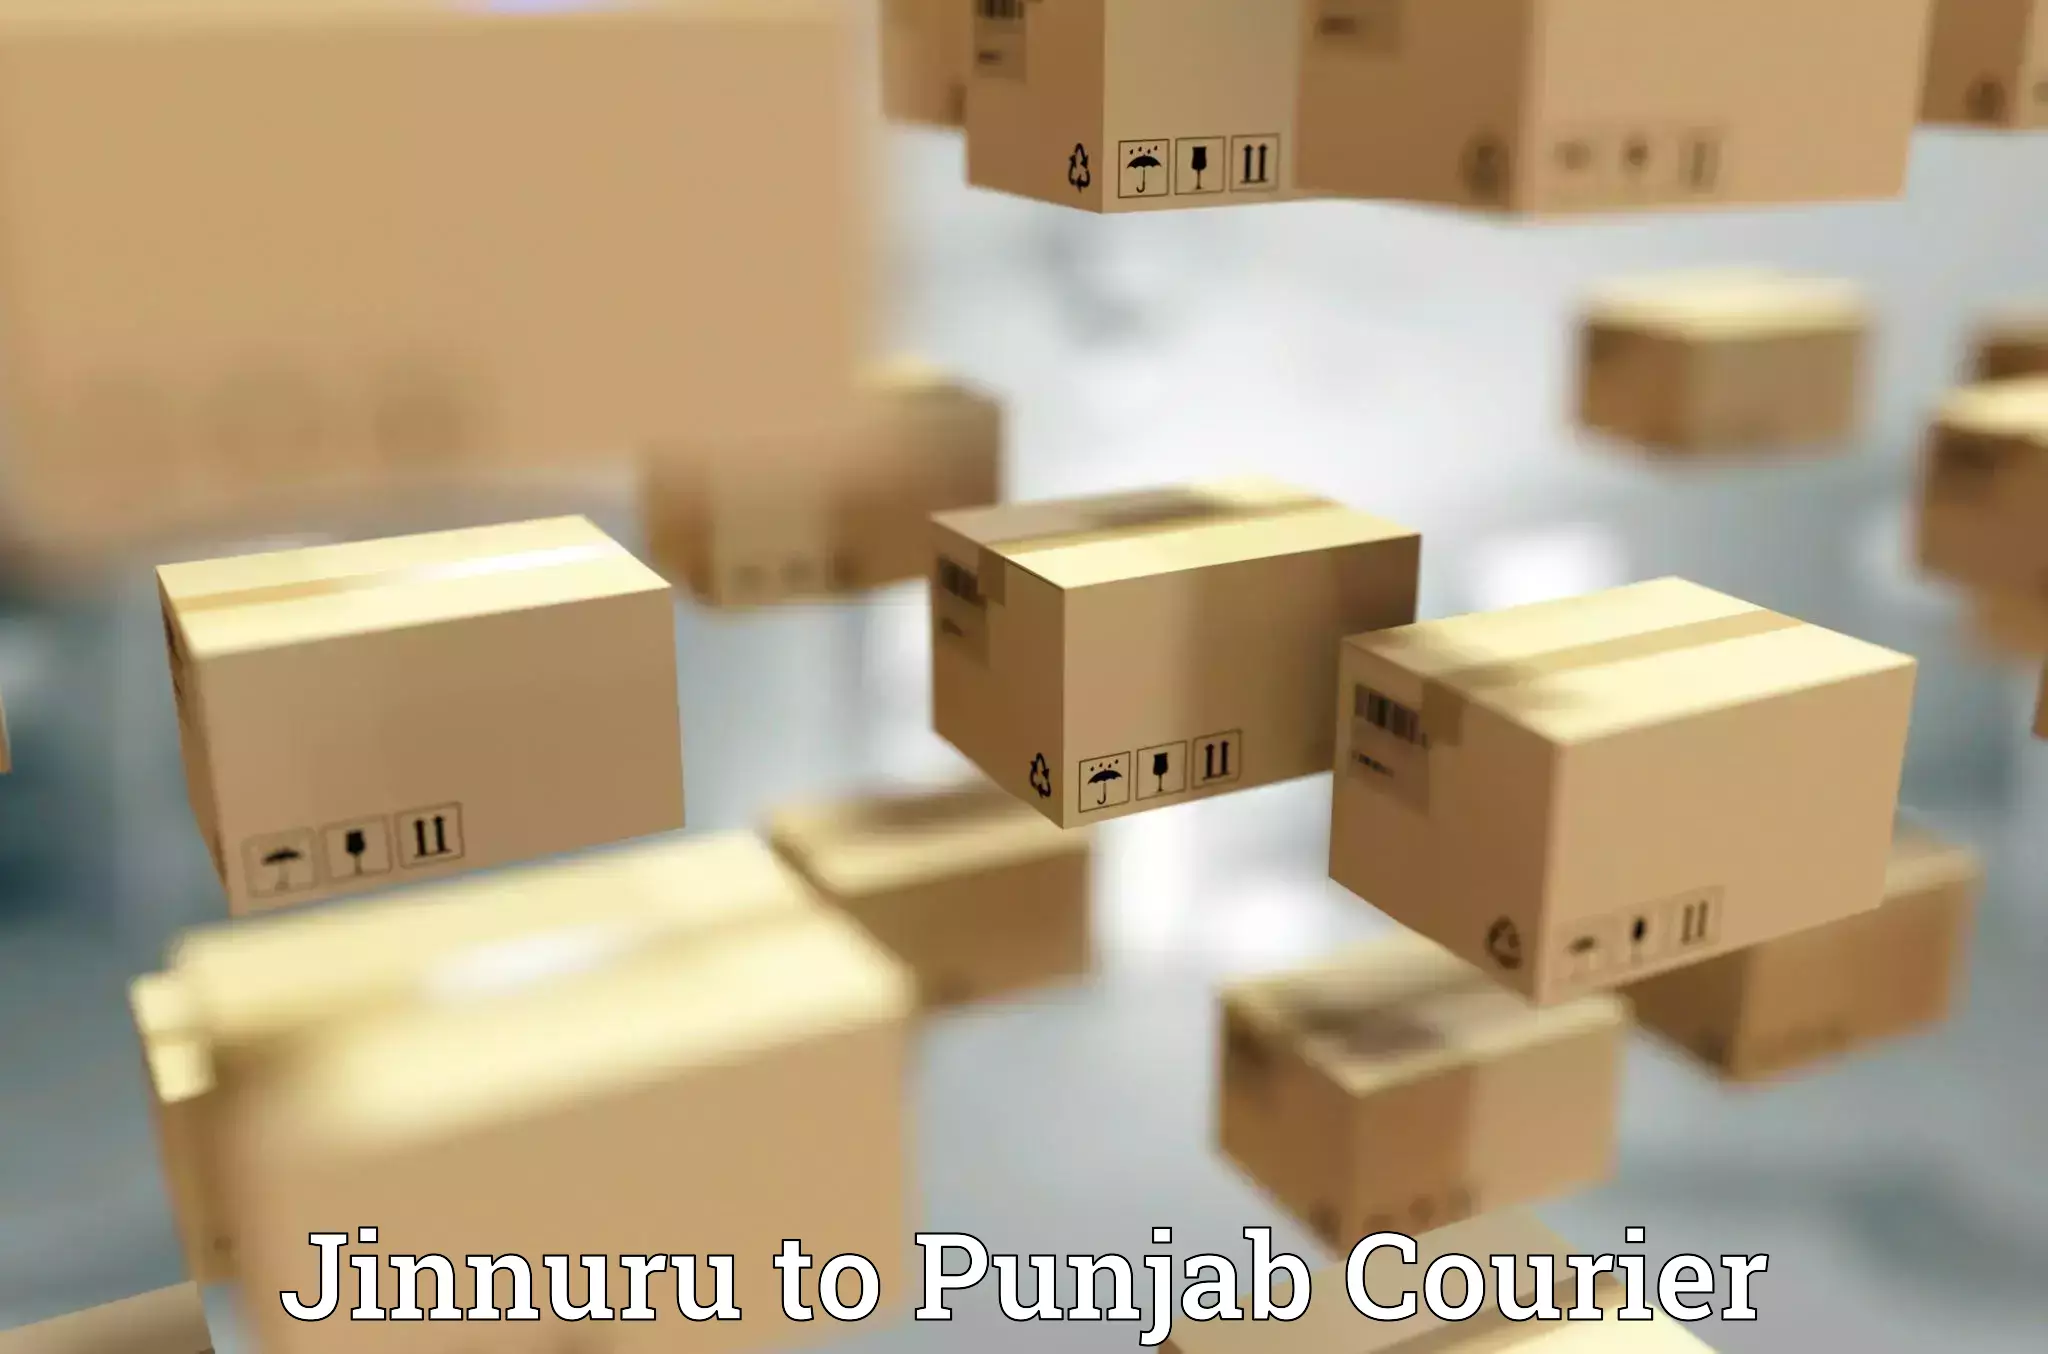 Digital courier platforms Jinnuru to Dhuri